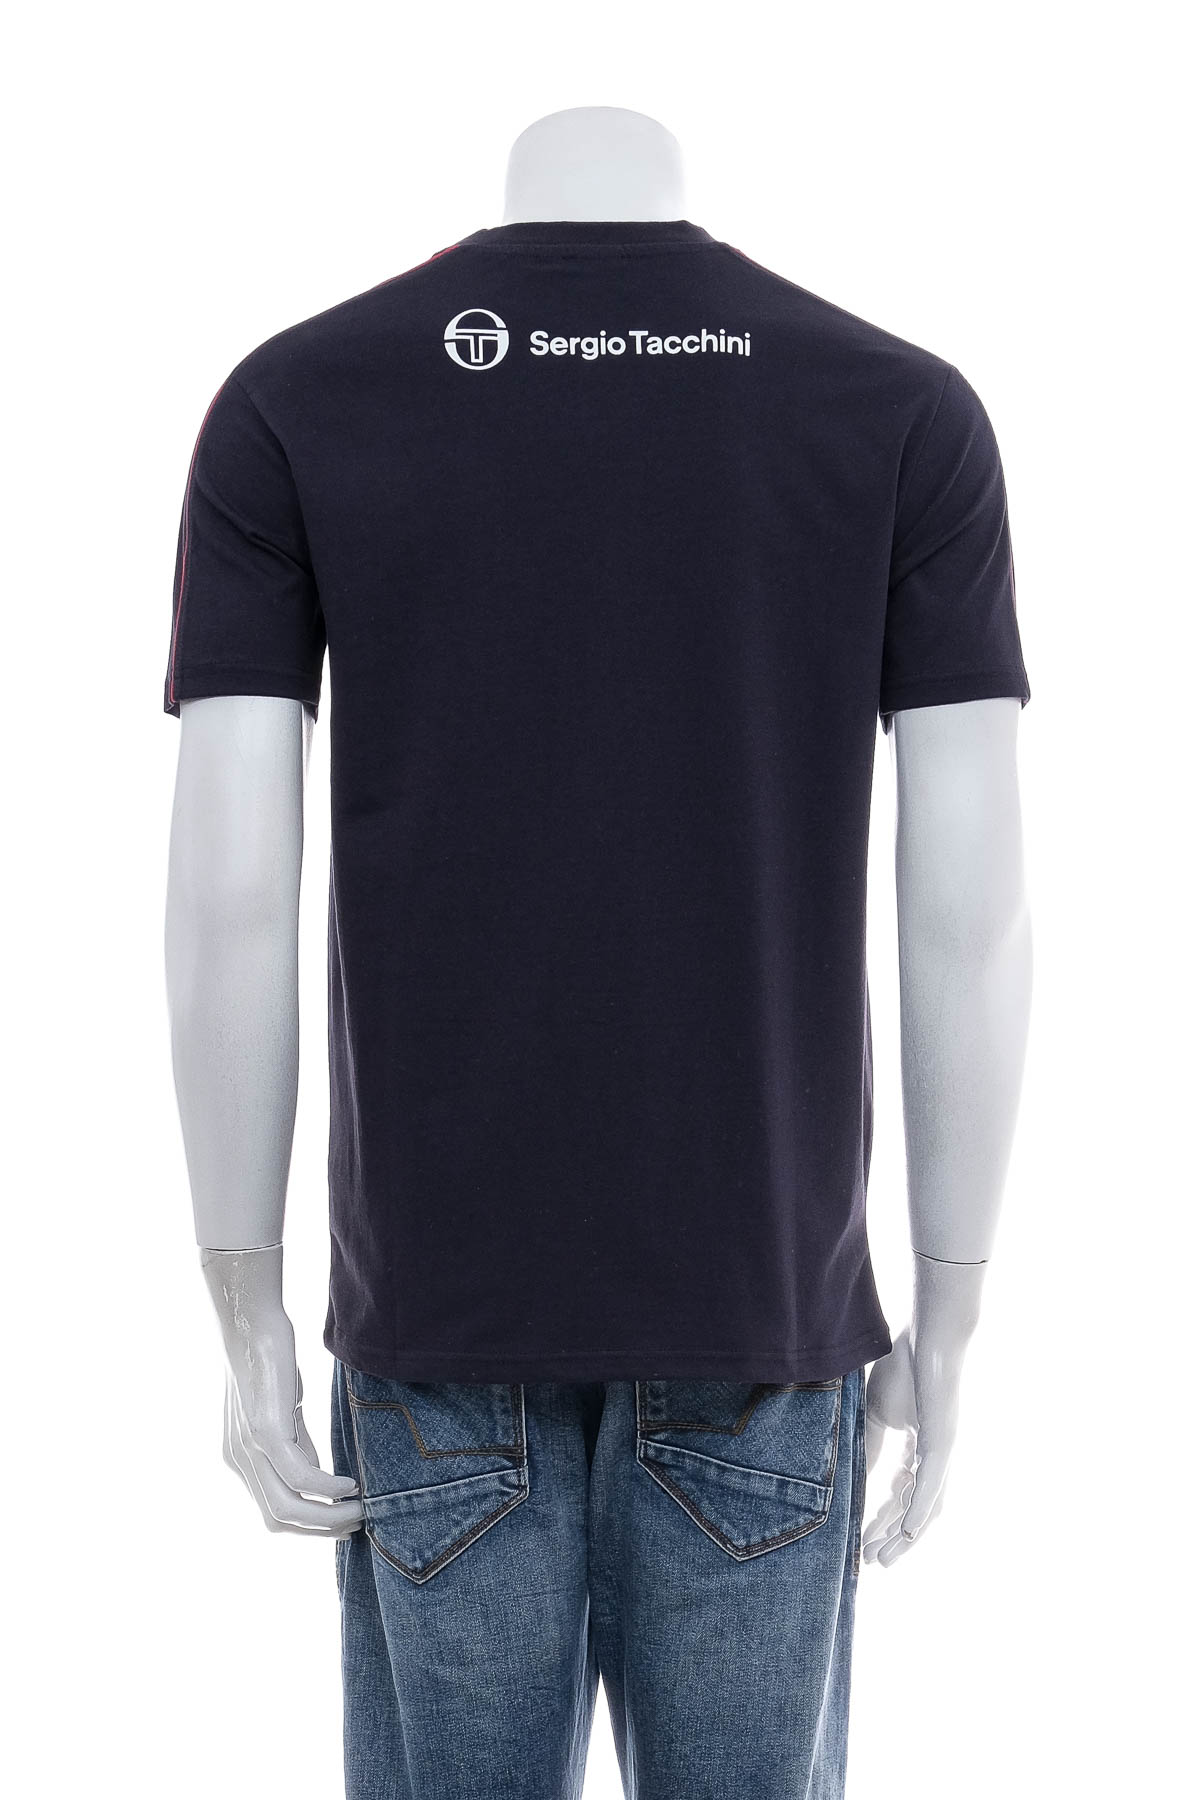 Men's T-shirt - Sergio Tacchini - 1